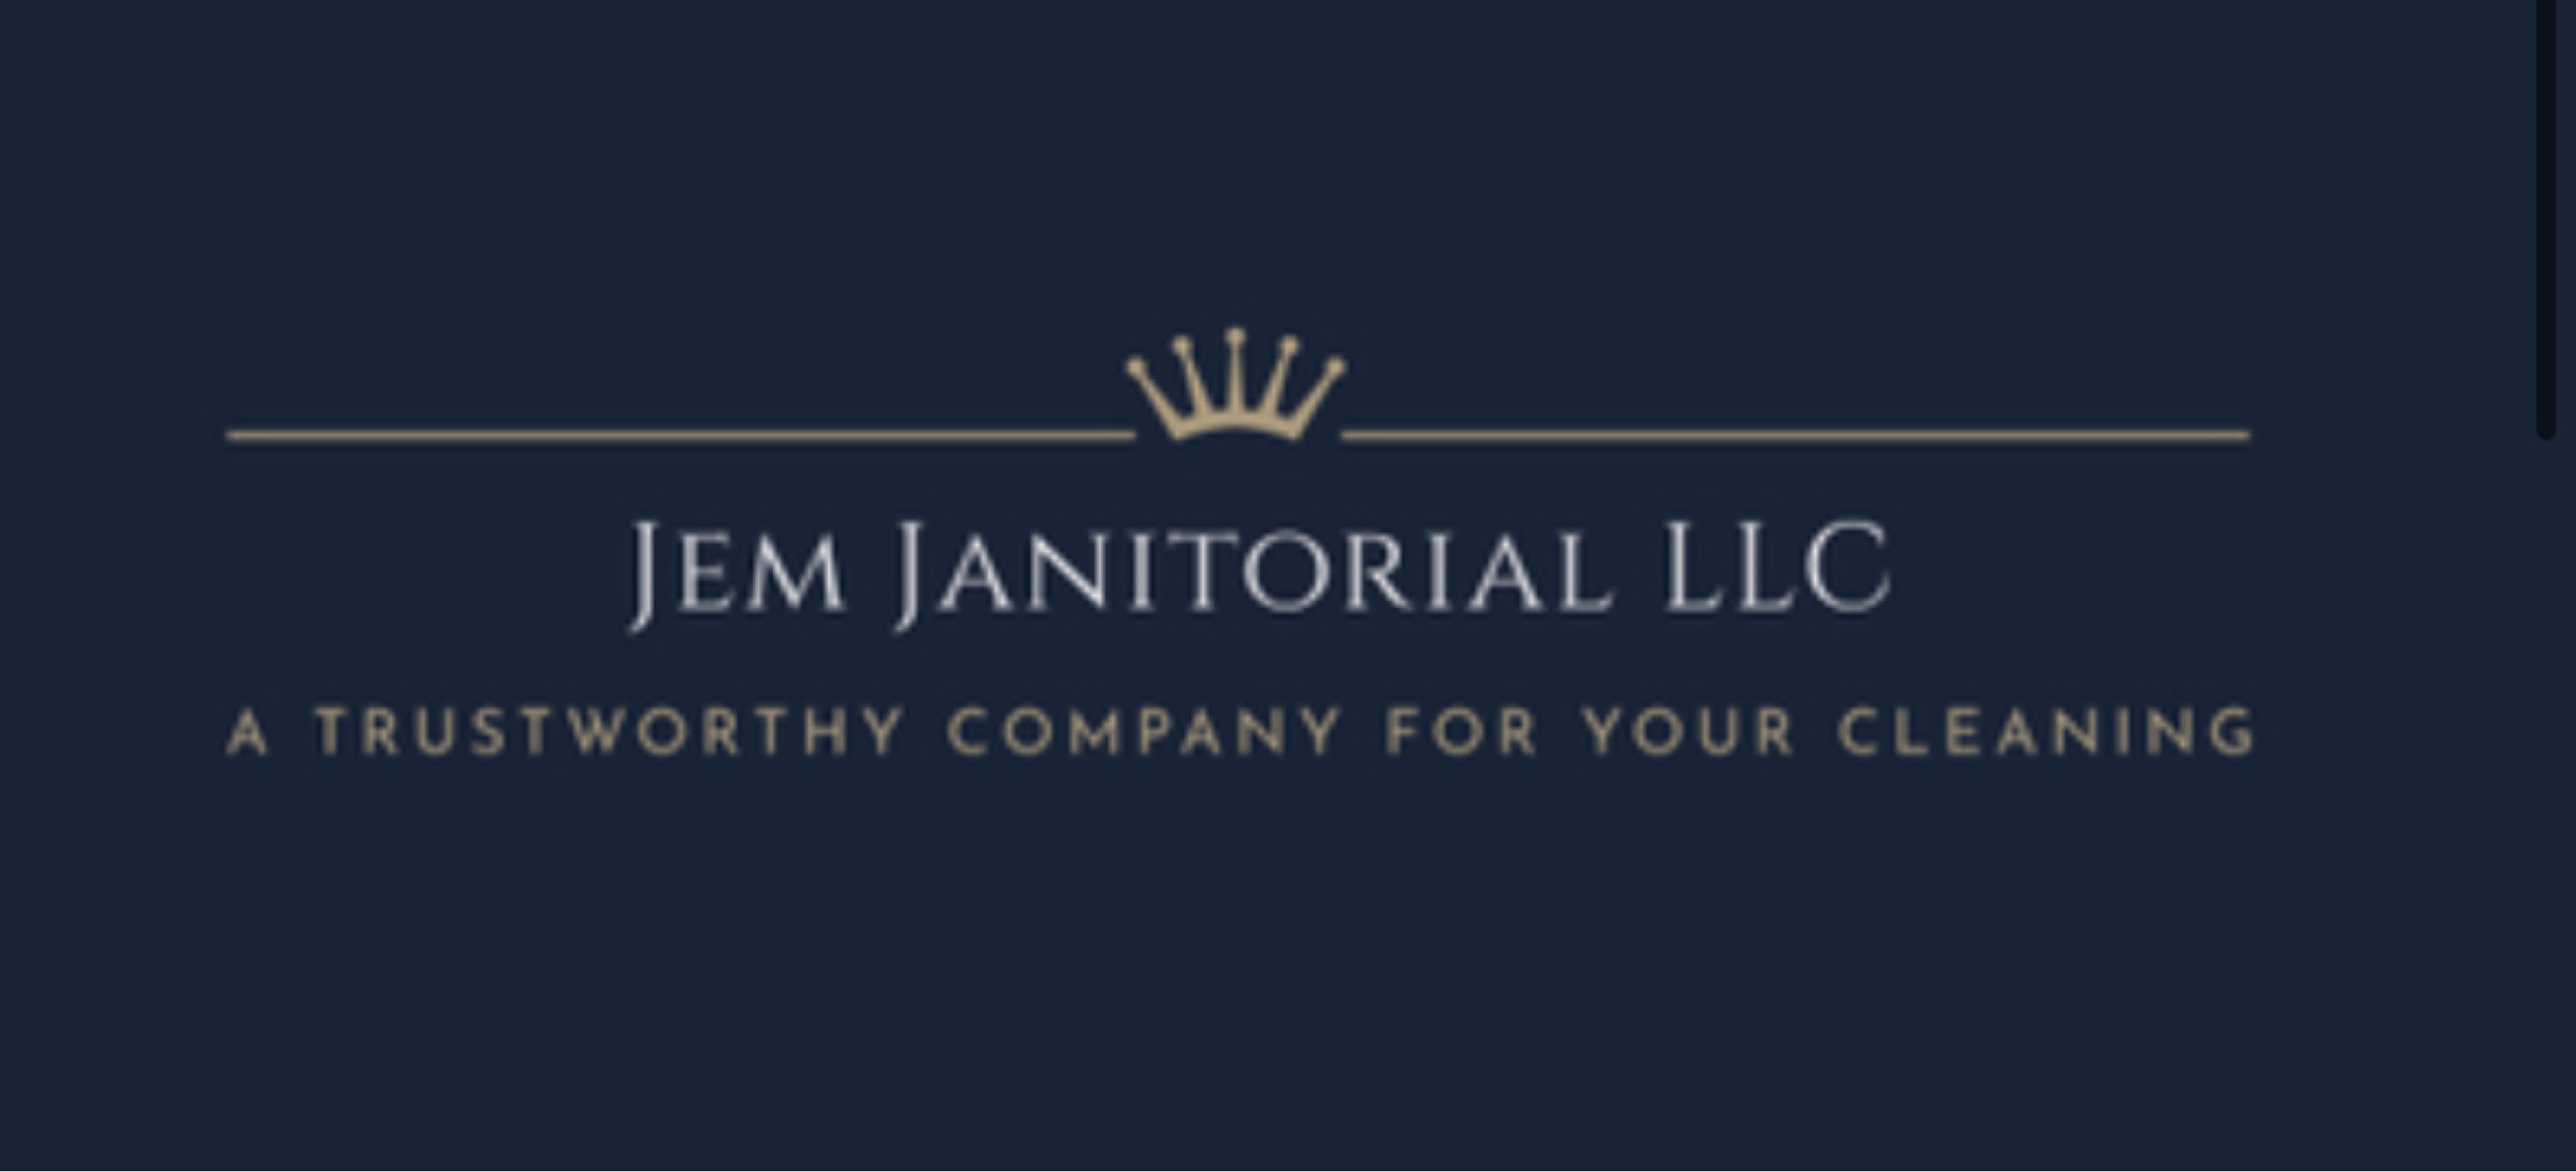 Jem Janitorial LLC Logo